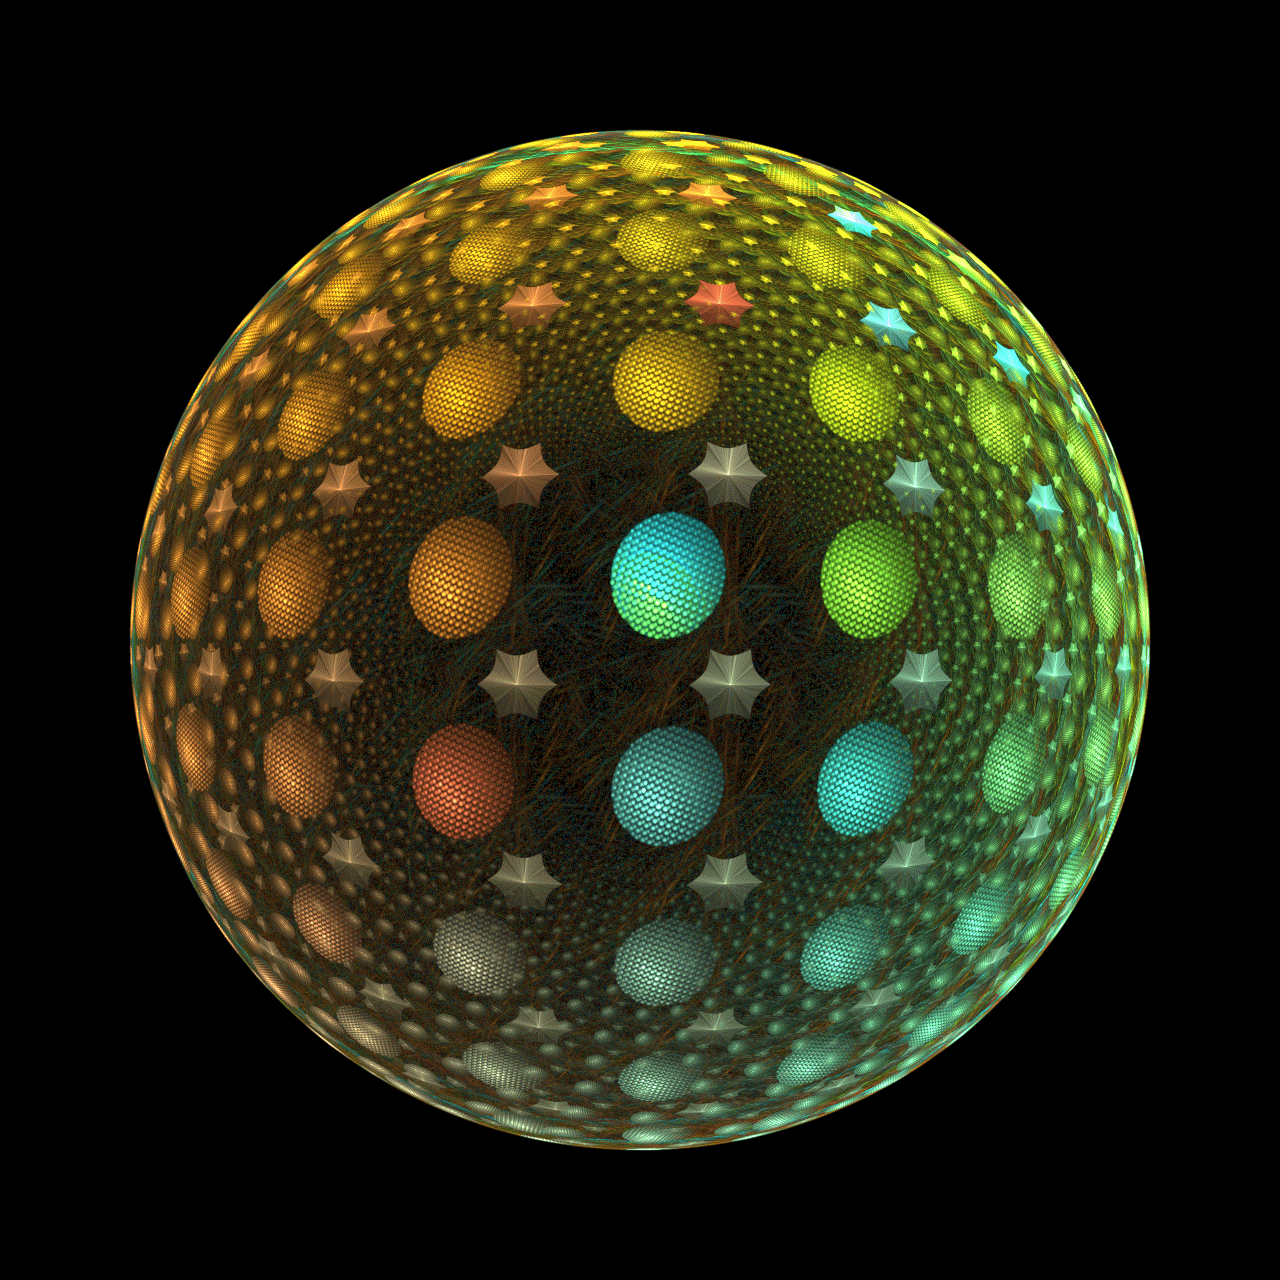 Disco Ball Animated Gif images